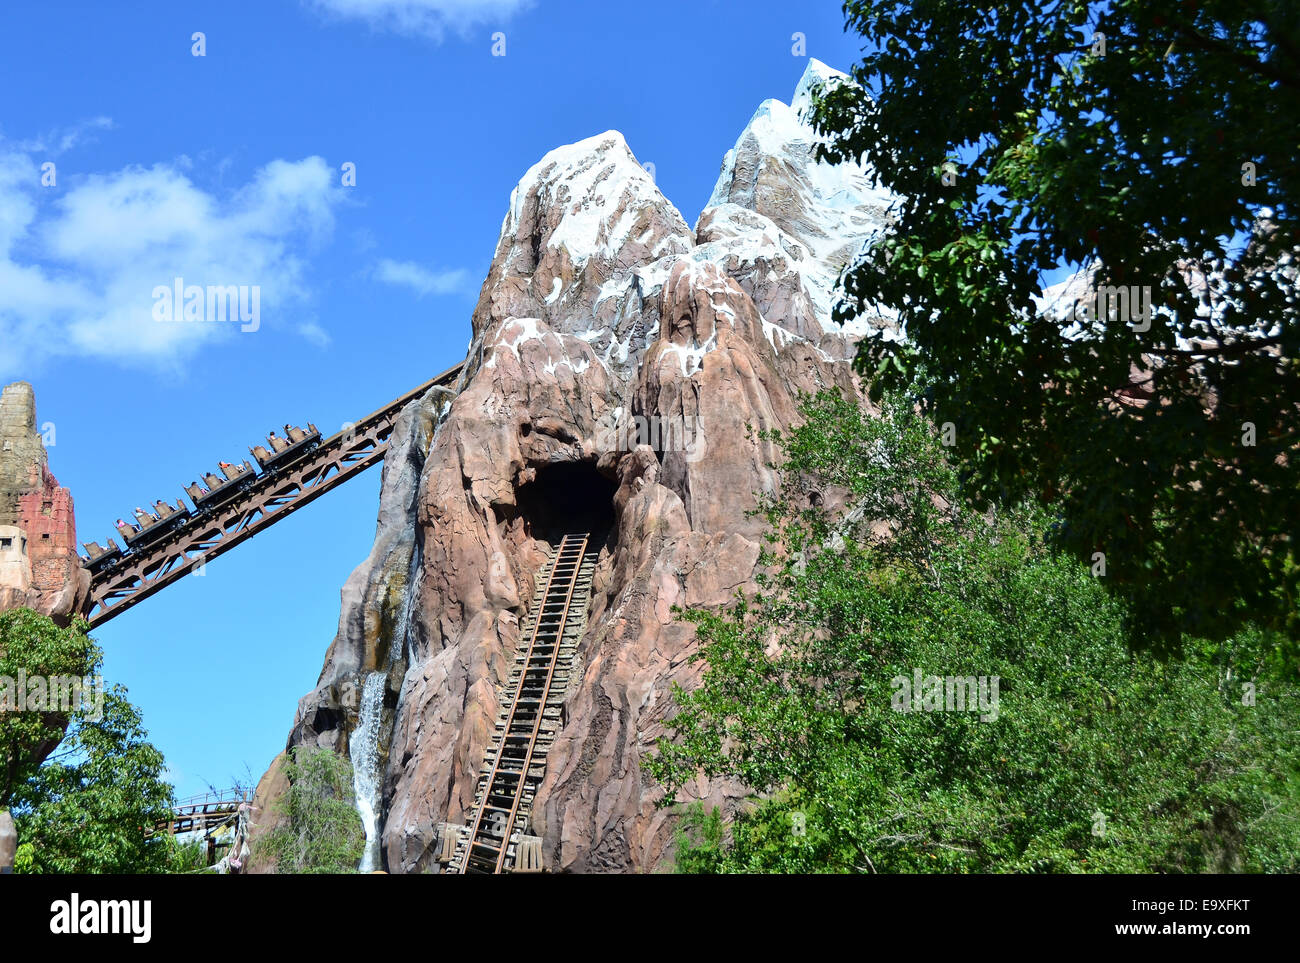 Expedition Everest Ride at Disney's Animal Kingdom, Walt Disney World Resort, Orlando, Florida Stock Photo